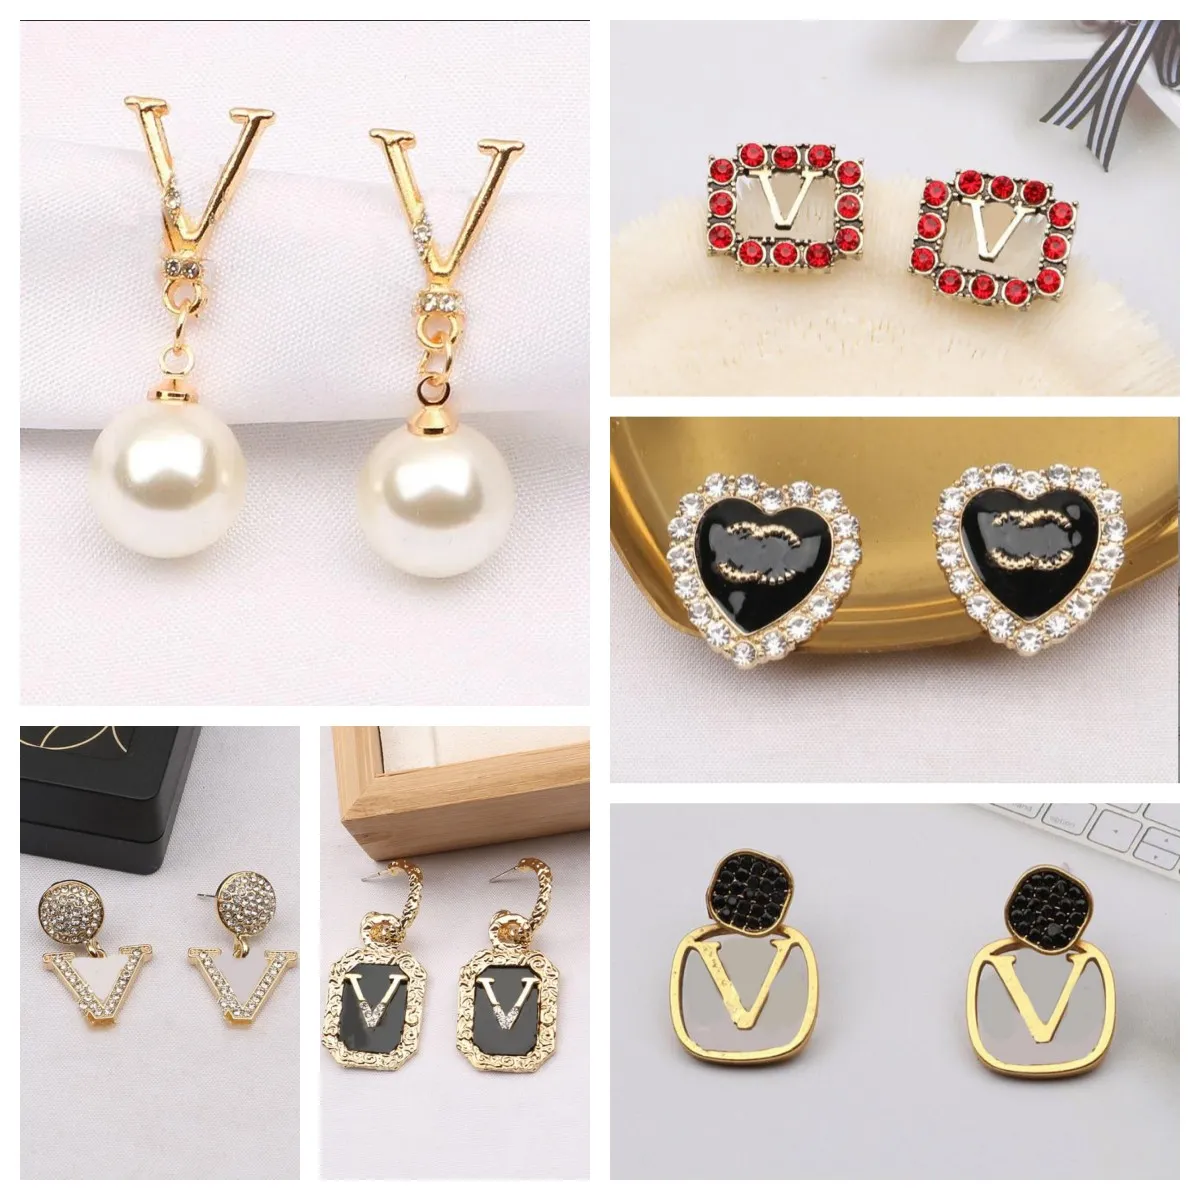 Elegant Designer Brand Earrings Letters Earrings 18K Gold Plated Fashion Women Wedding Party Jewelry Accessories 20style